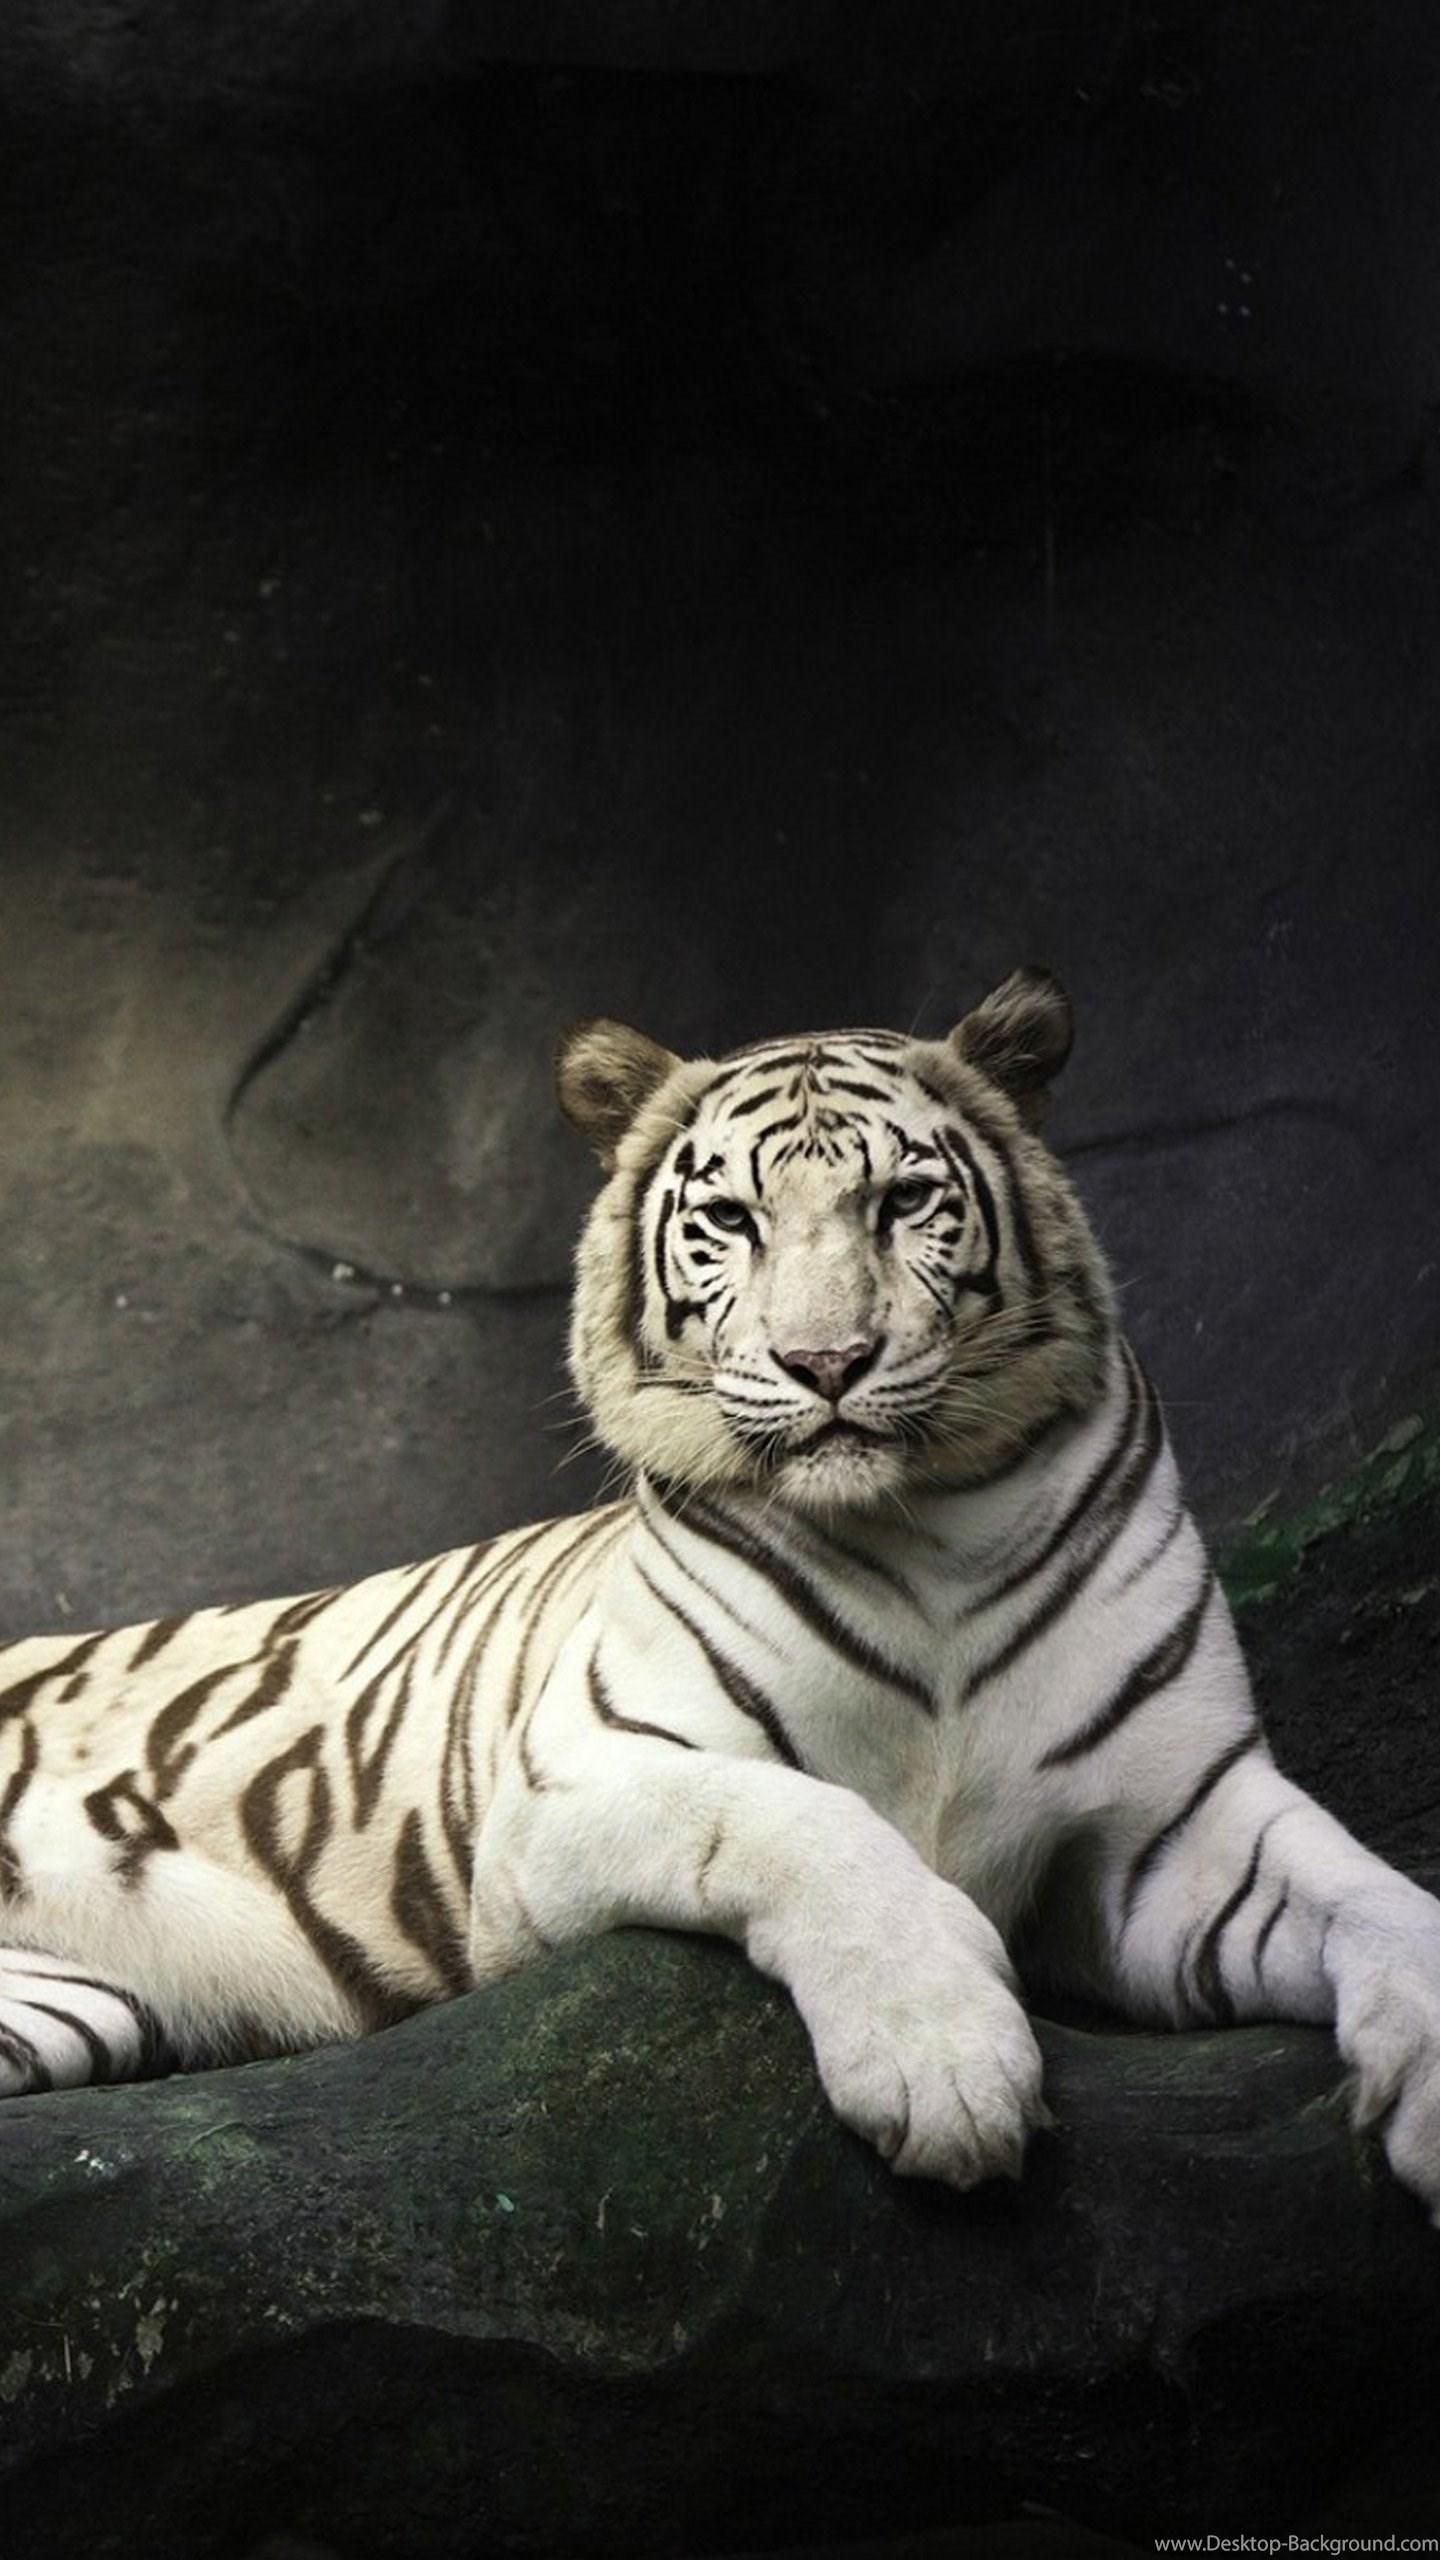 Super Beautiful White Tiger Galaxy S6 Wallpaper Desktop Background